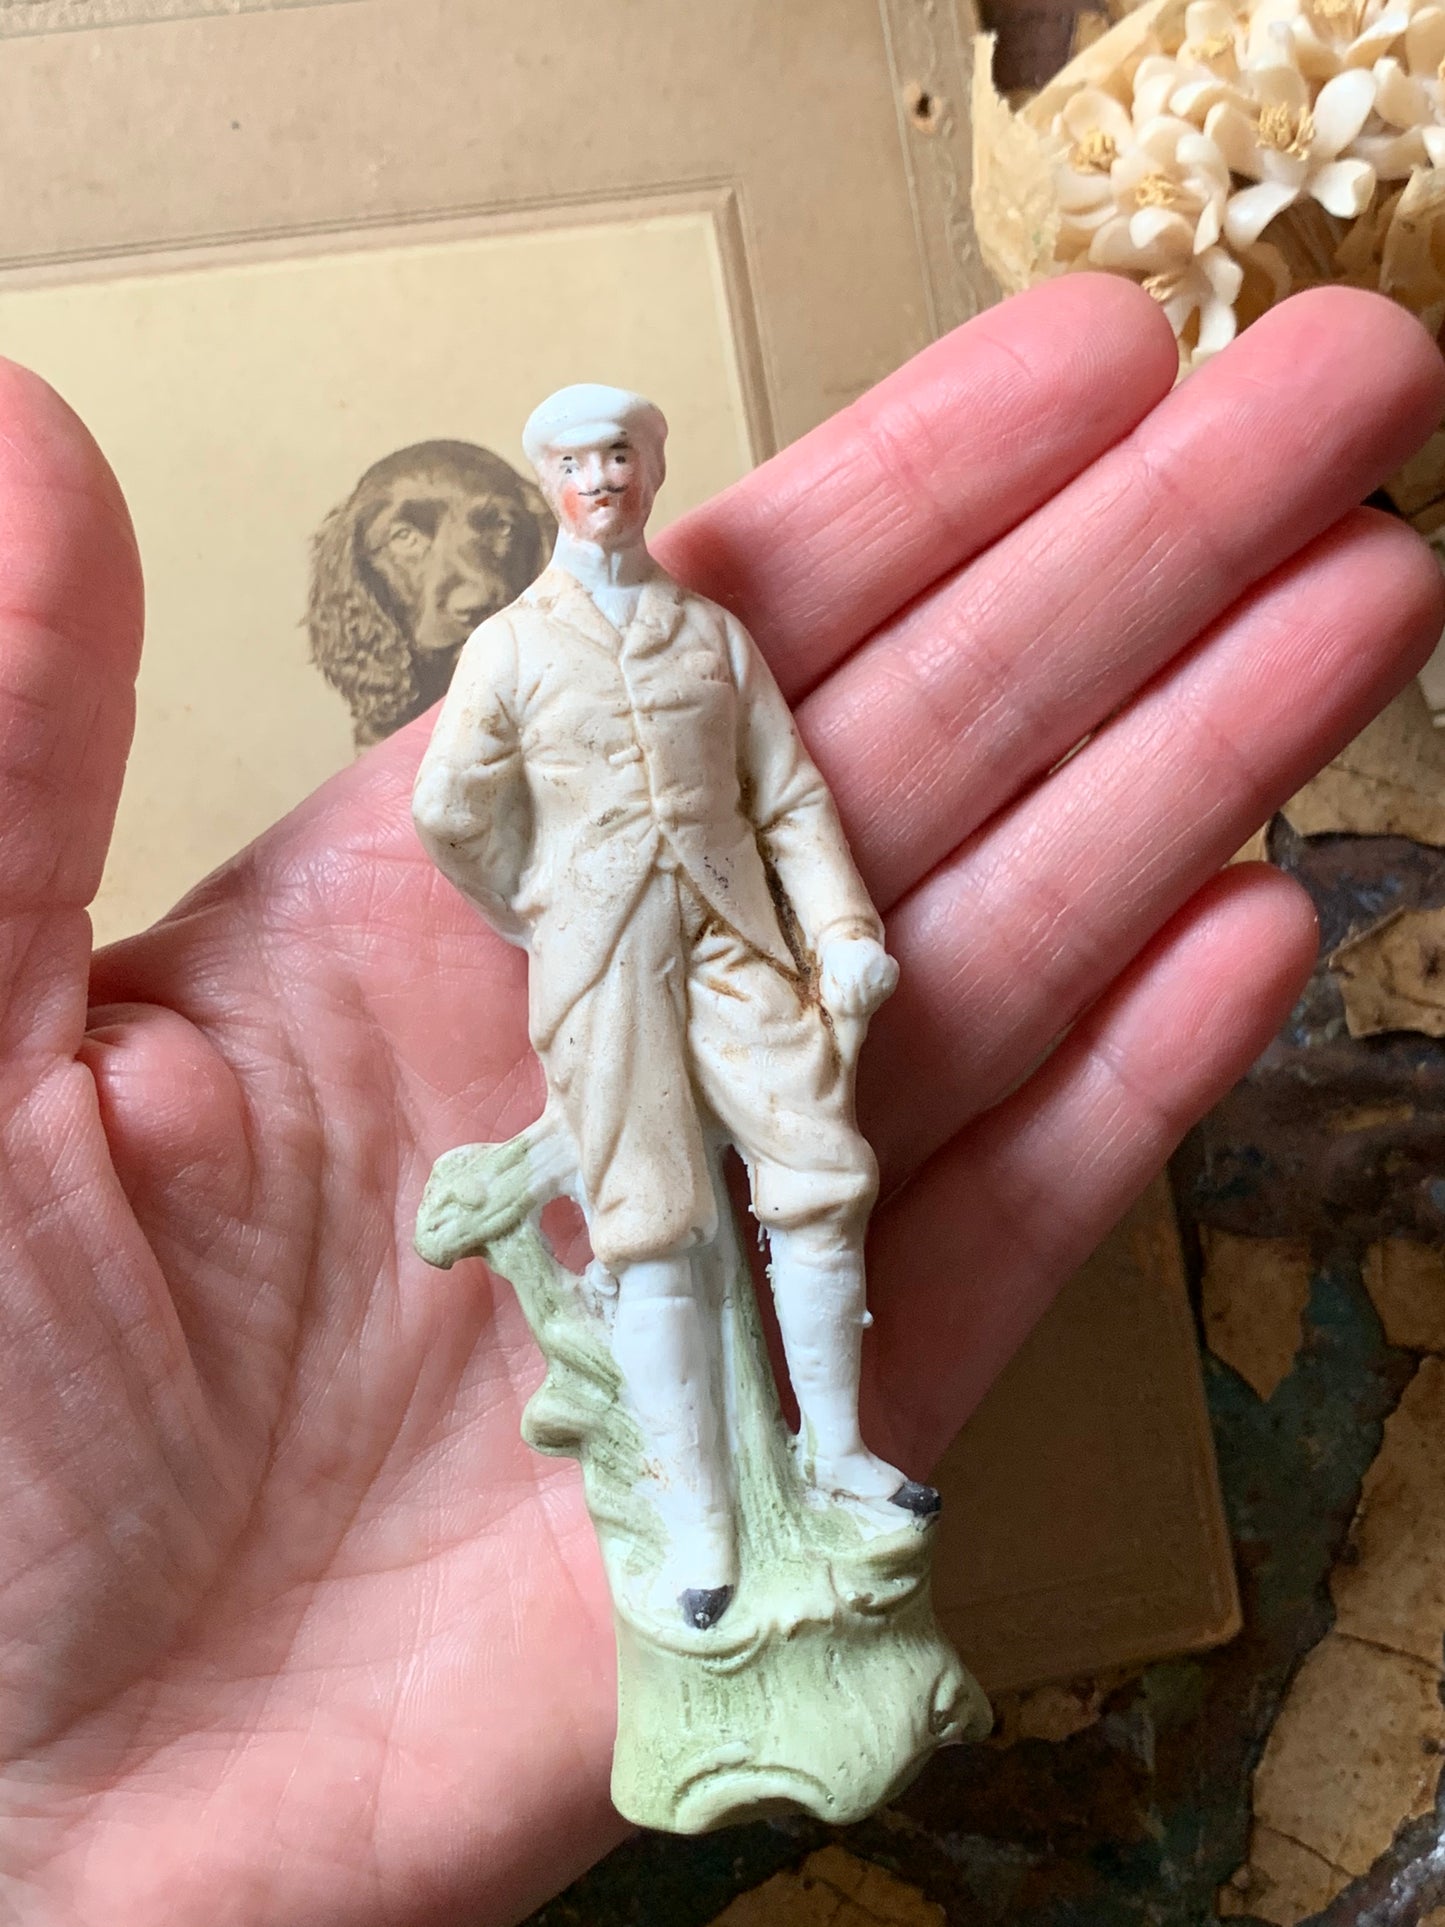 Antique miniature golfer figurine